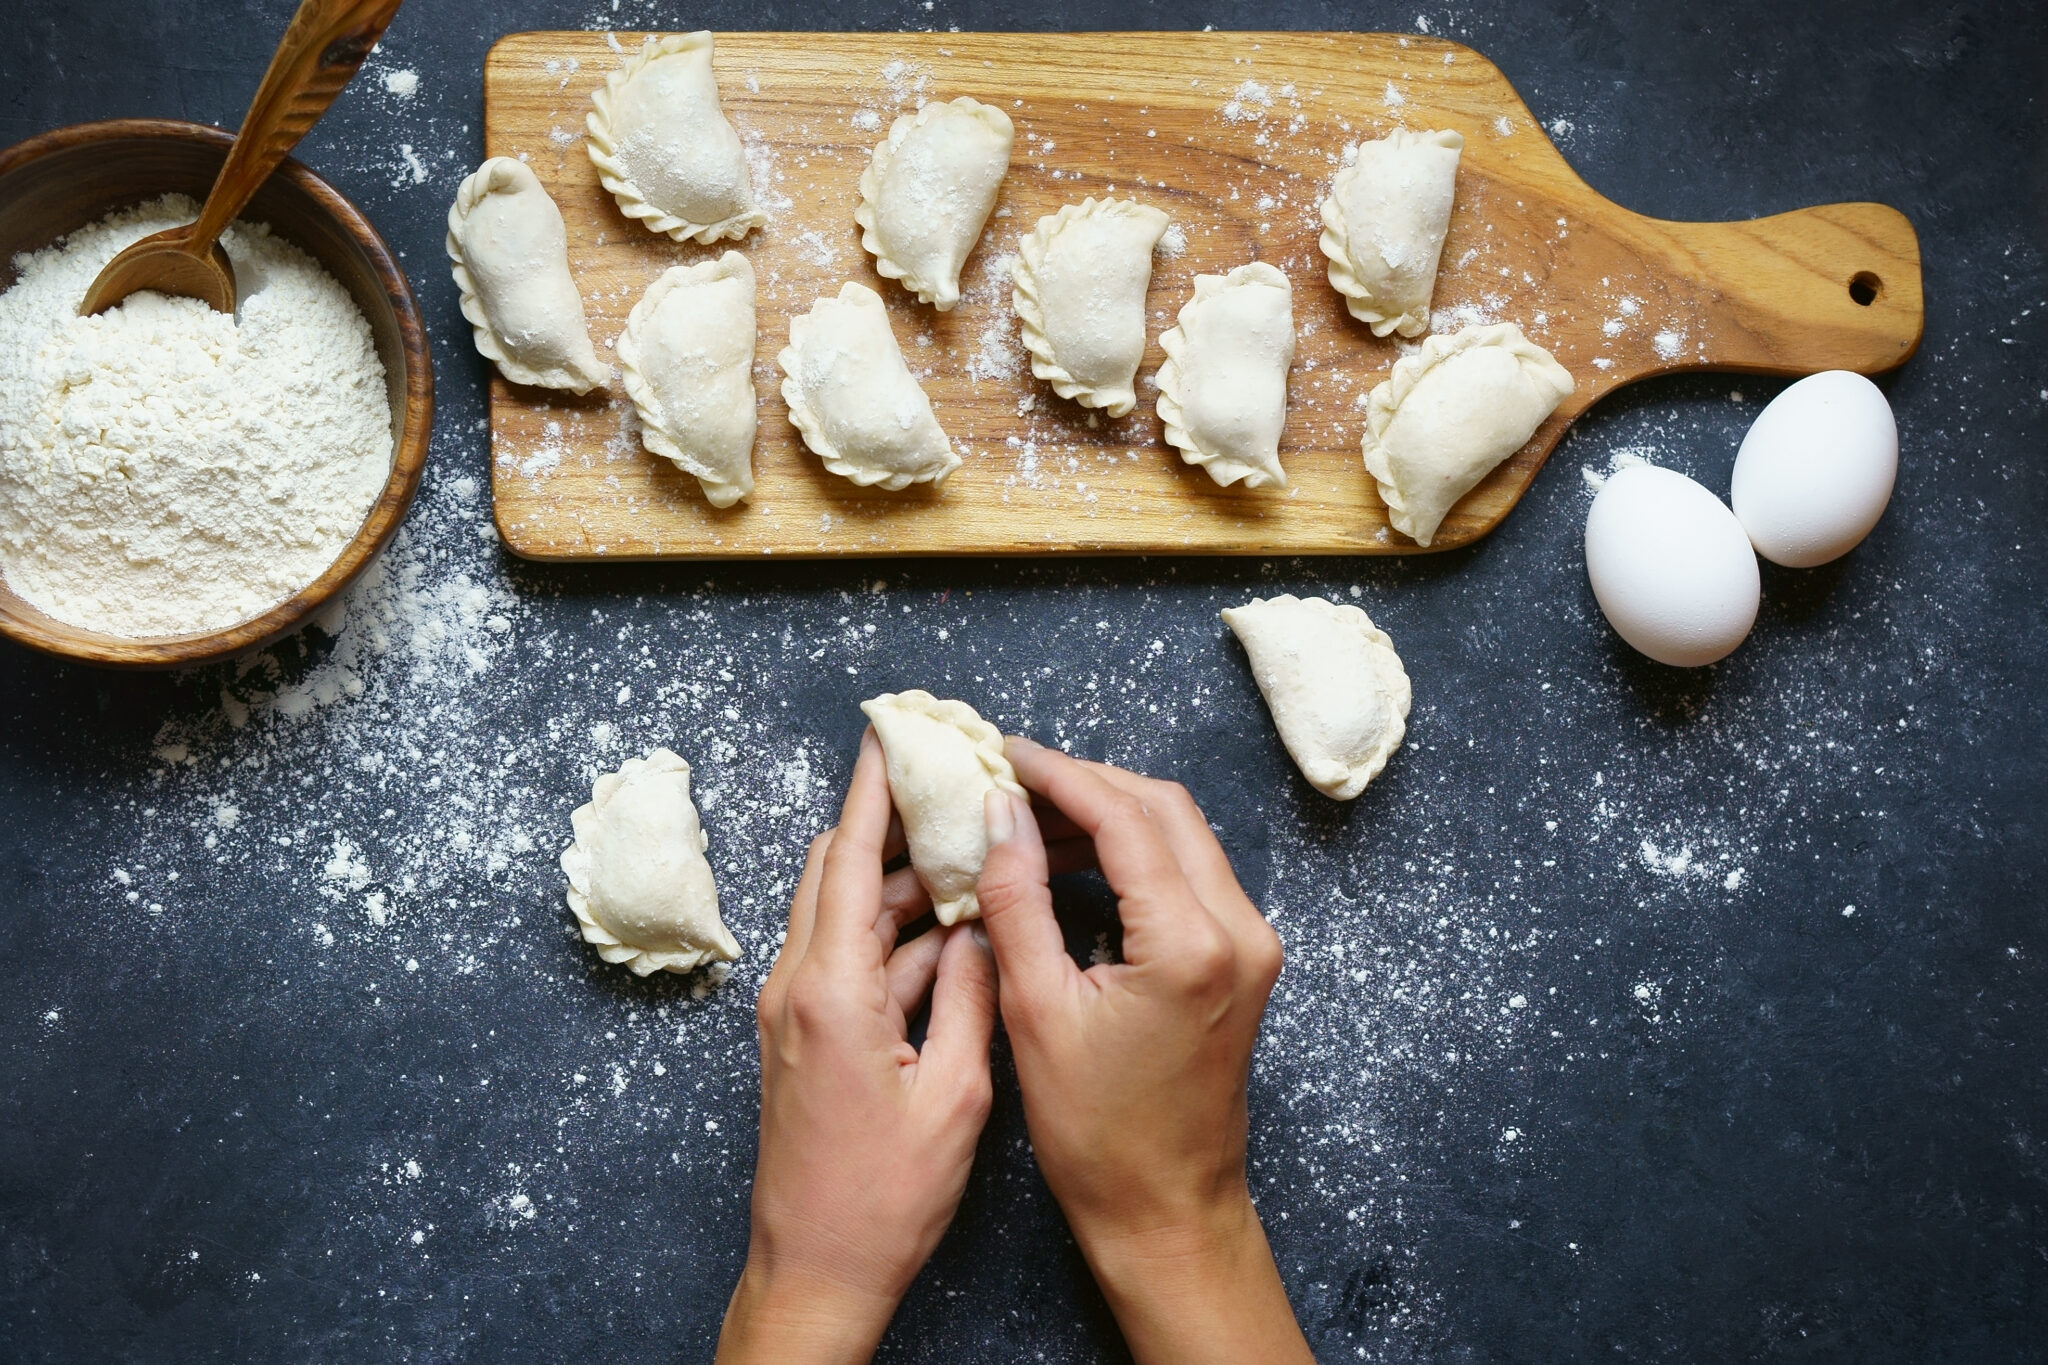 Hands pleating dumplings on a flour dusted board